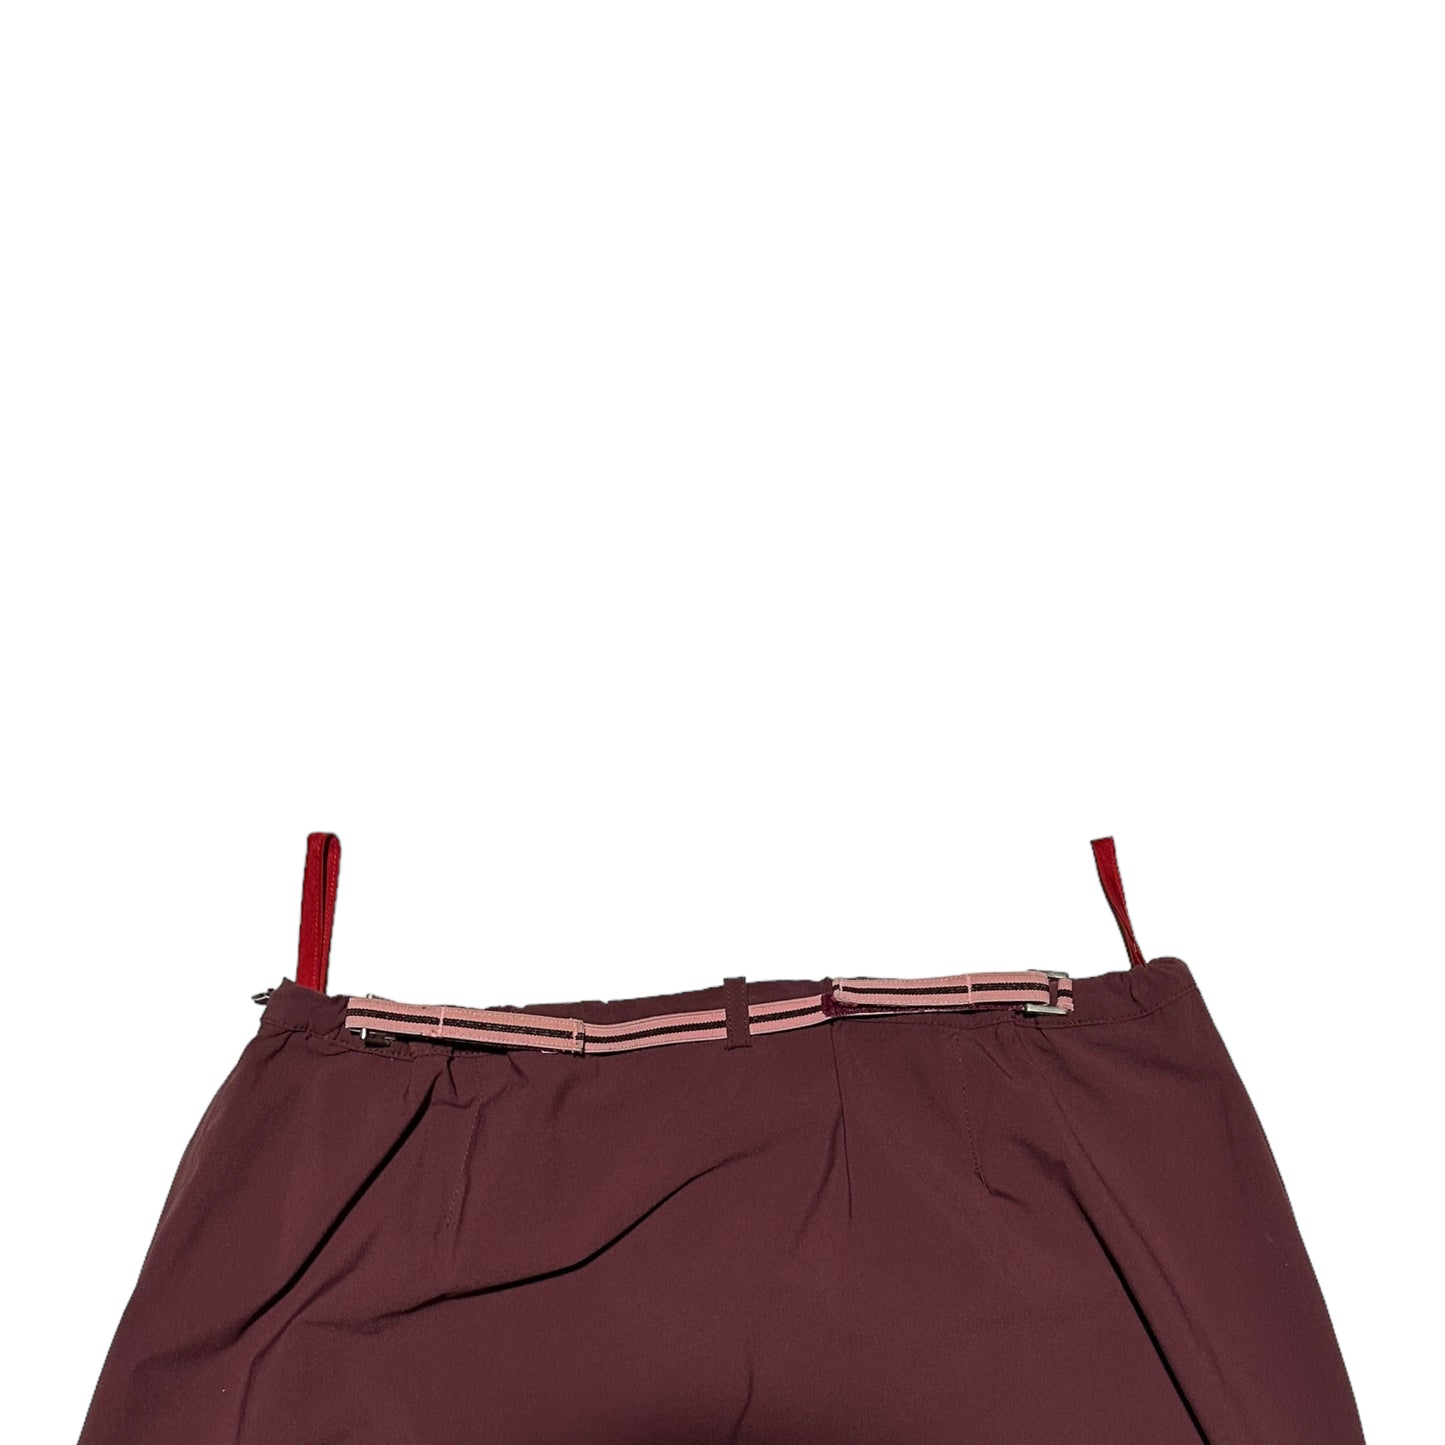 S/S 2000 Prada Sport Belt Skirt (34W)